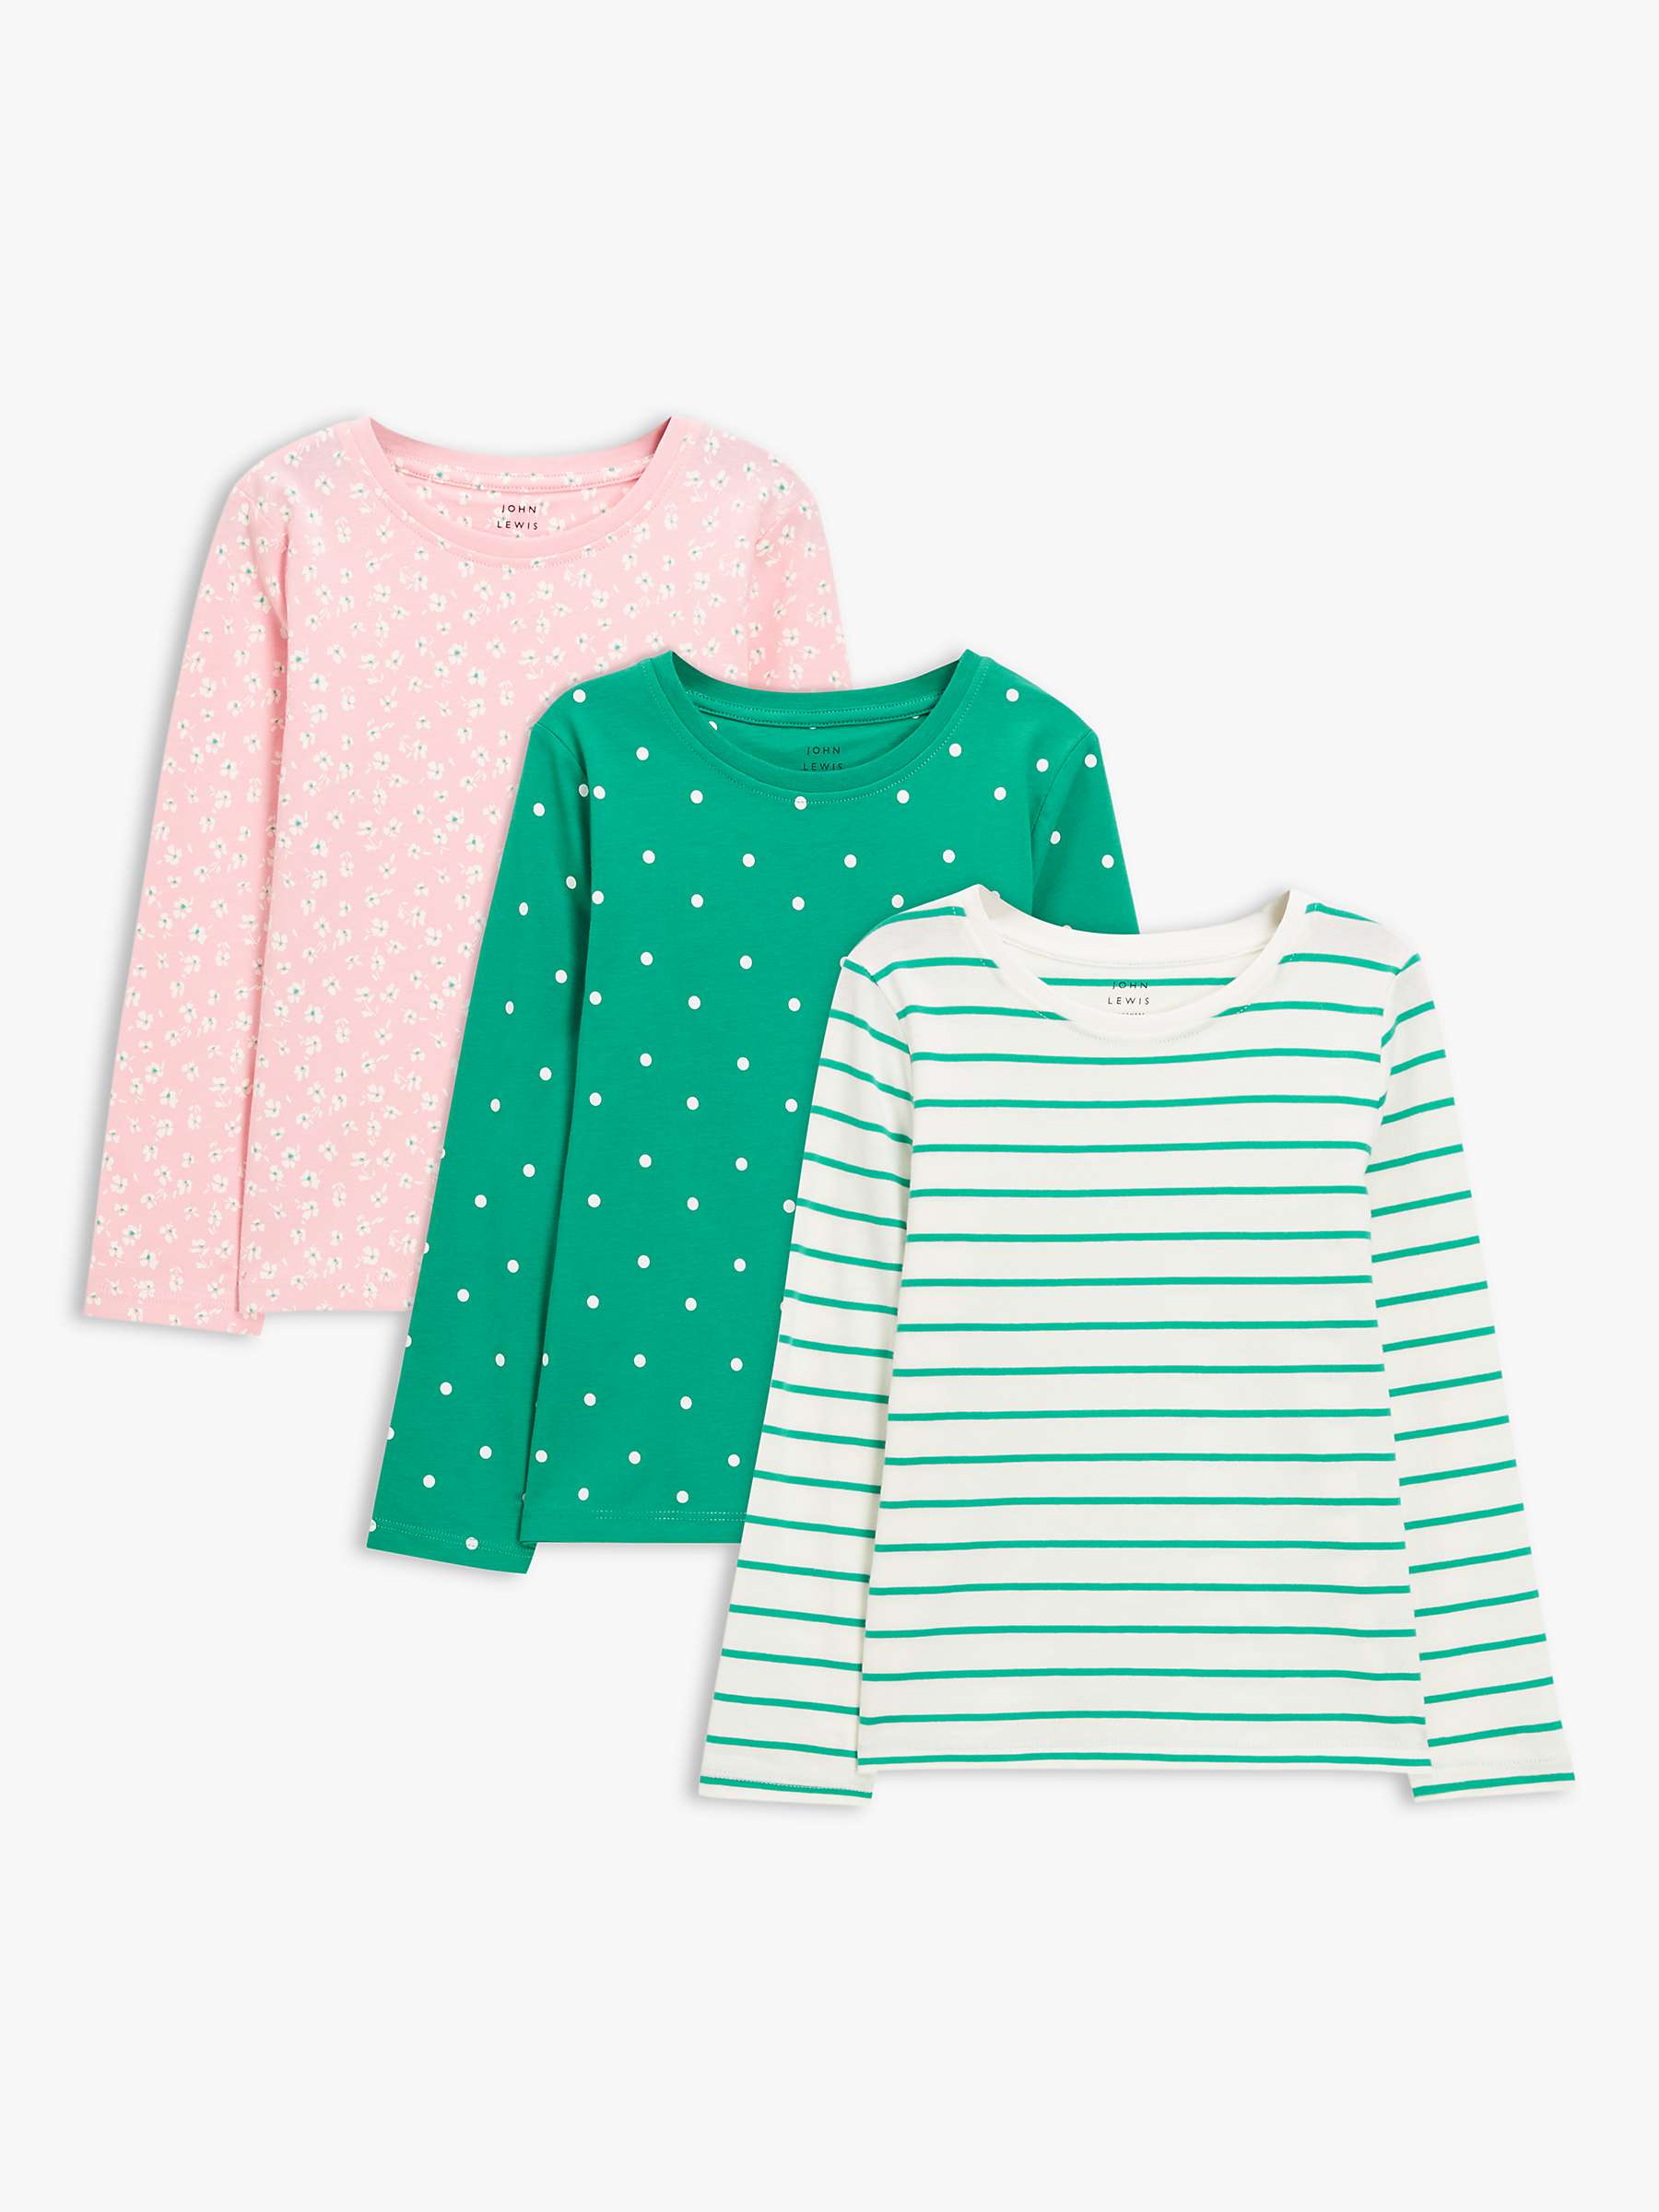 Buy John Lewis Kids' Floral/Spot/Stripe Jersey Tops, Pack of 3, Pink/Green Online at johnlewis.com